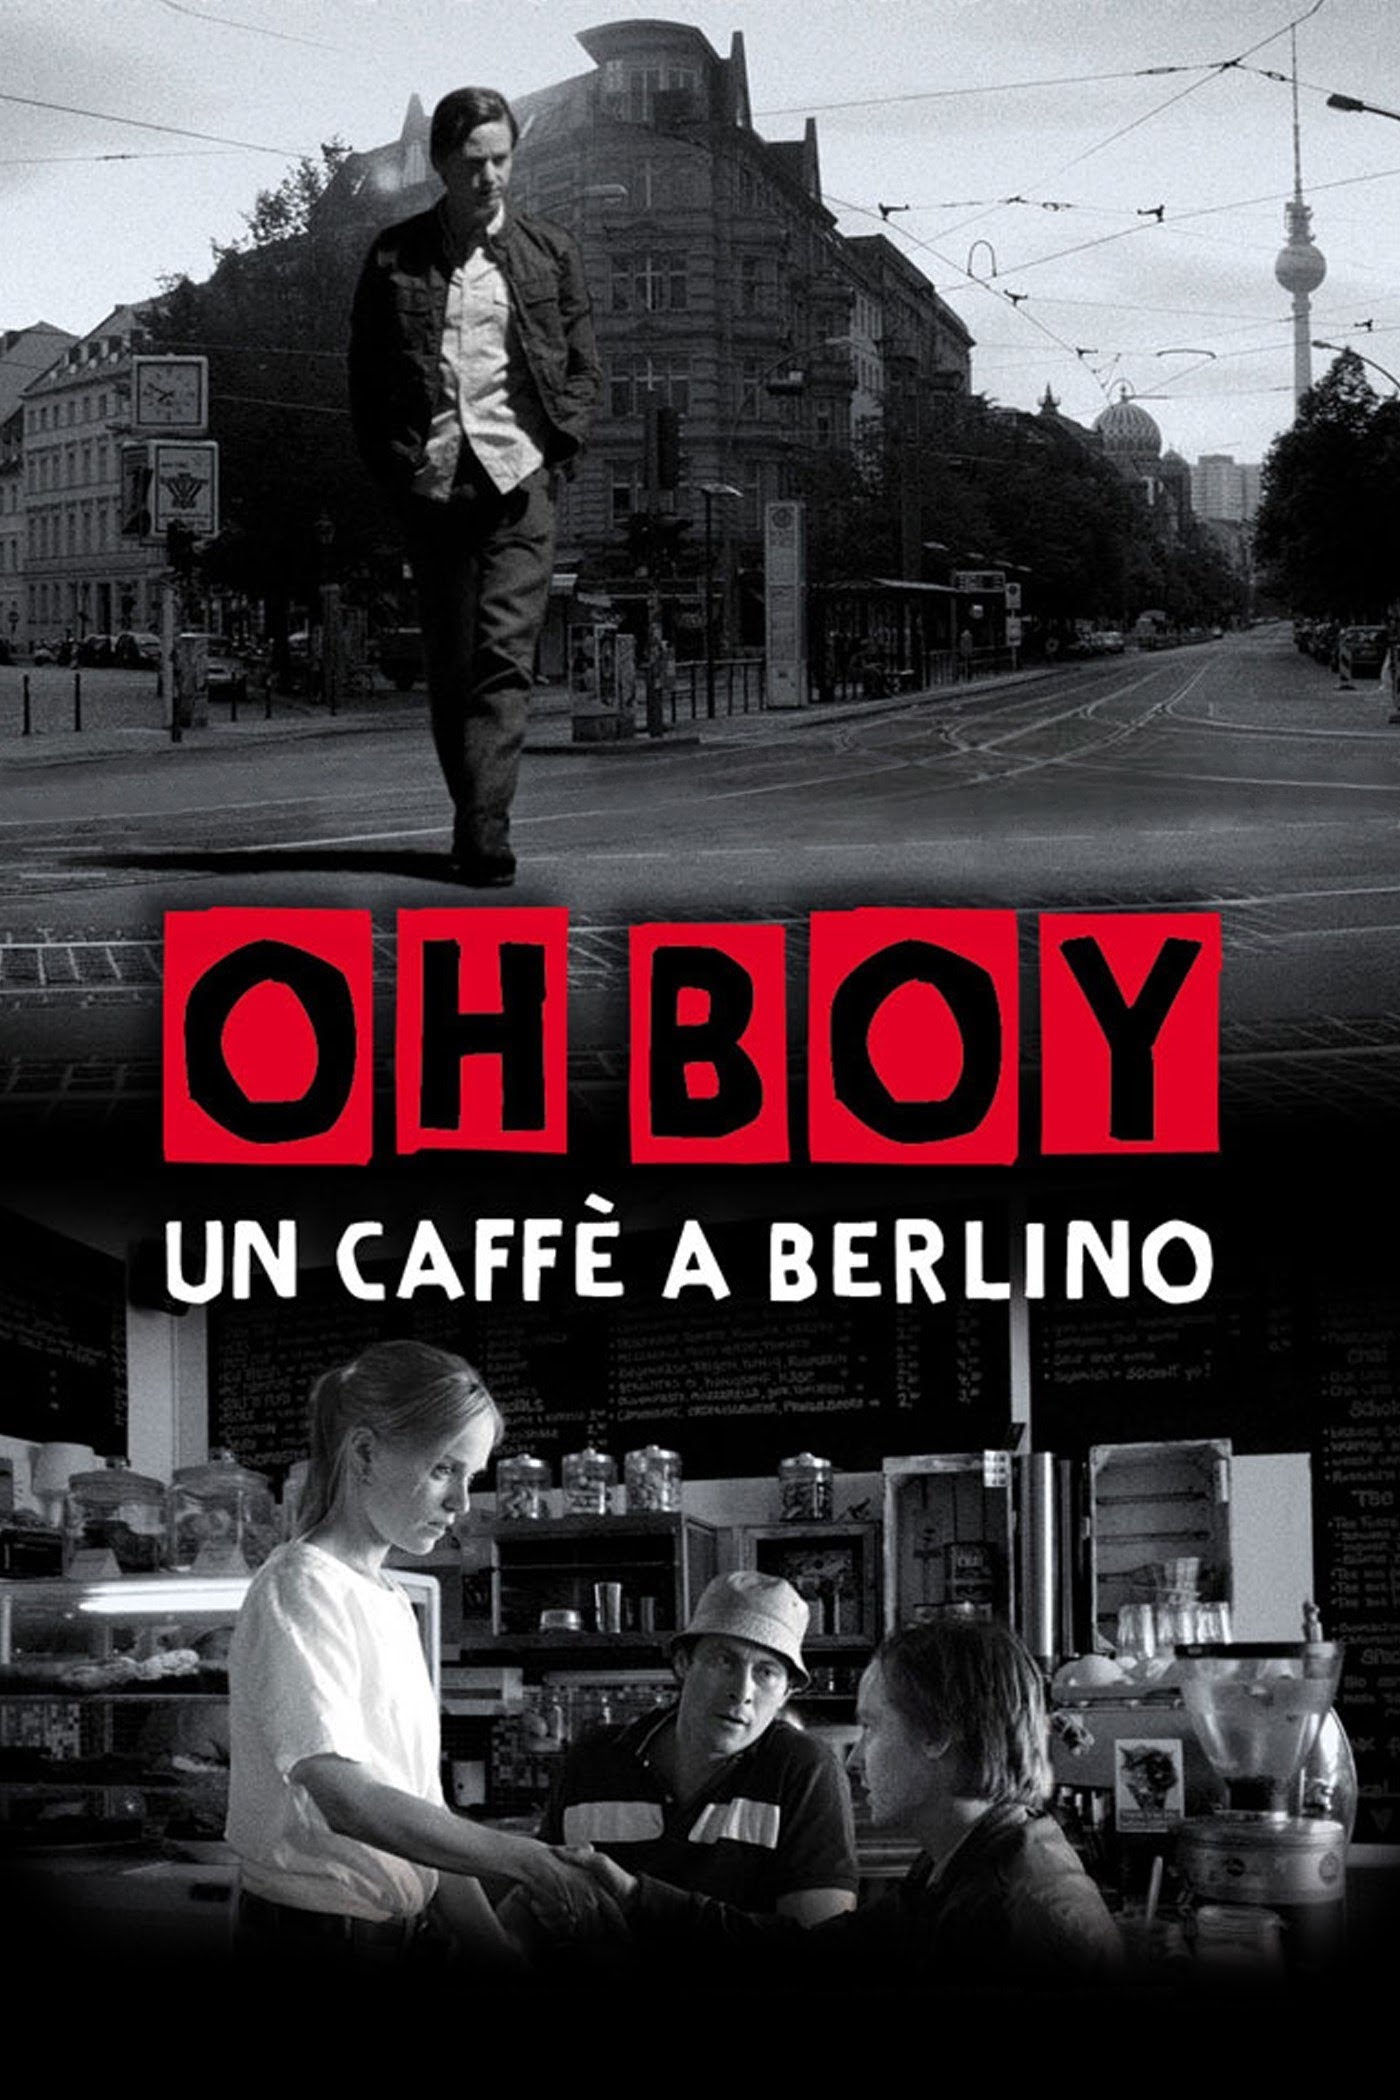 Oh Boy – Un caffè a Berlino [B/N] [HD] (2013)